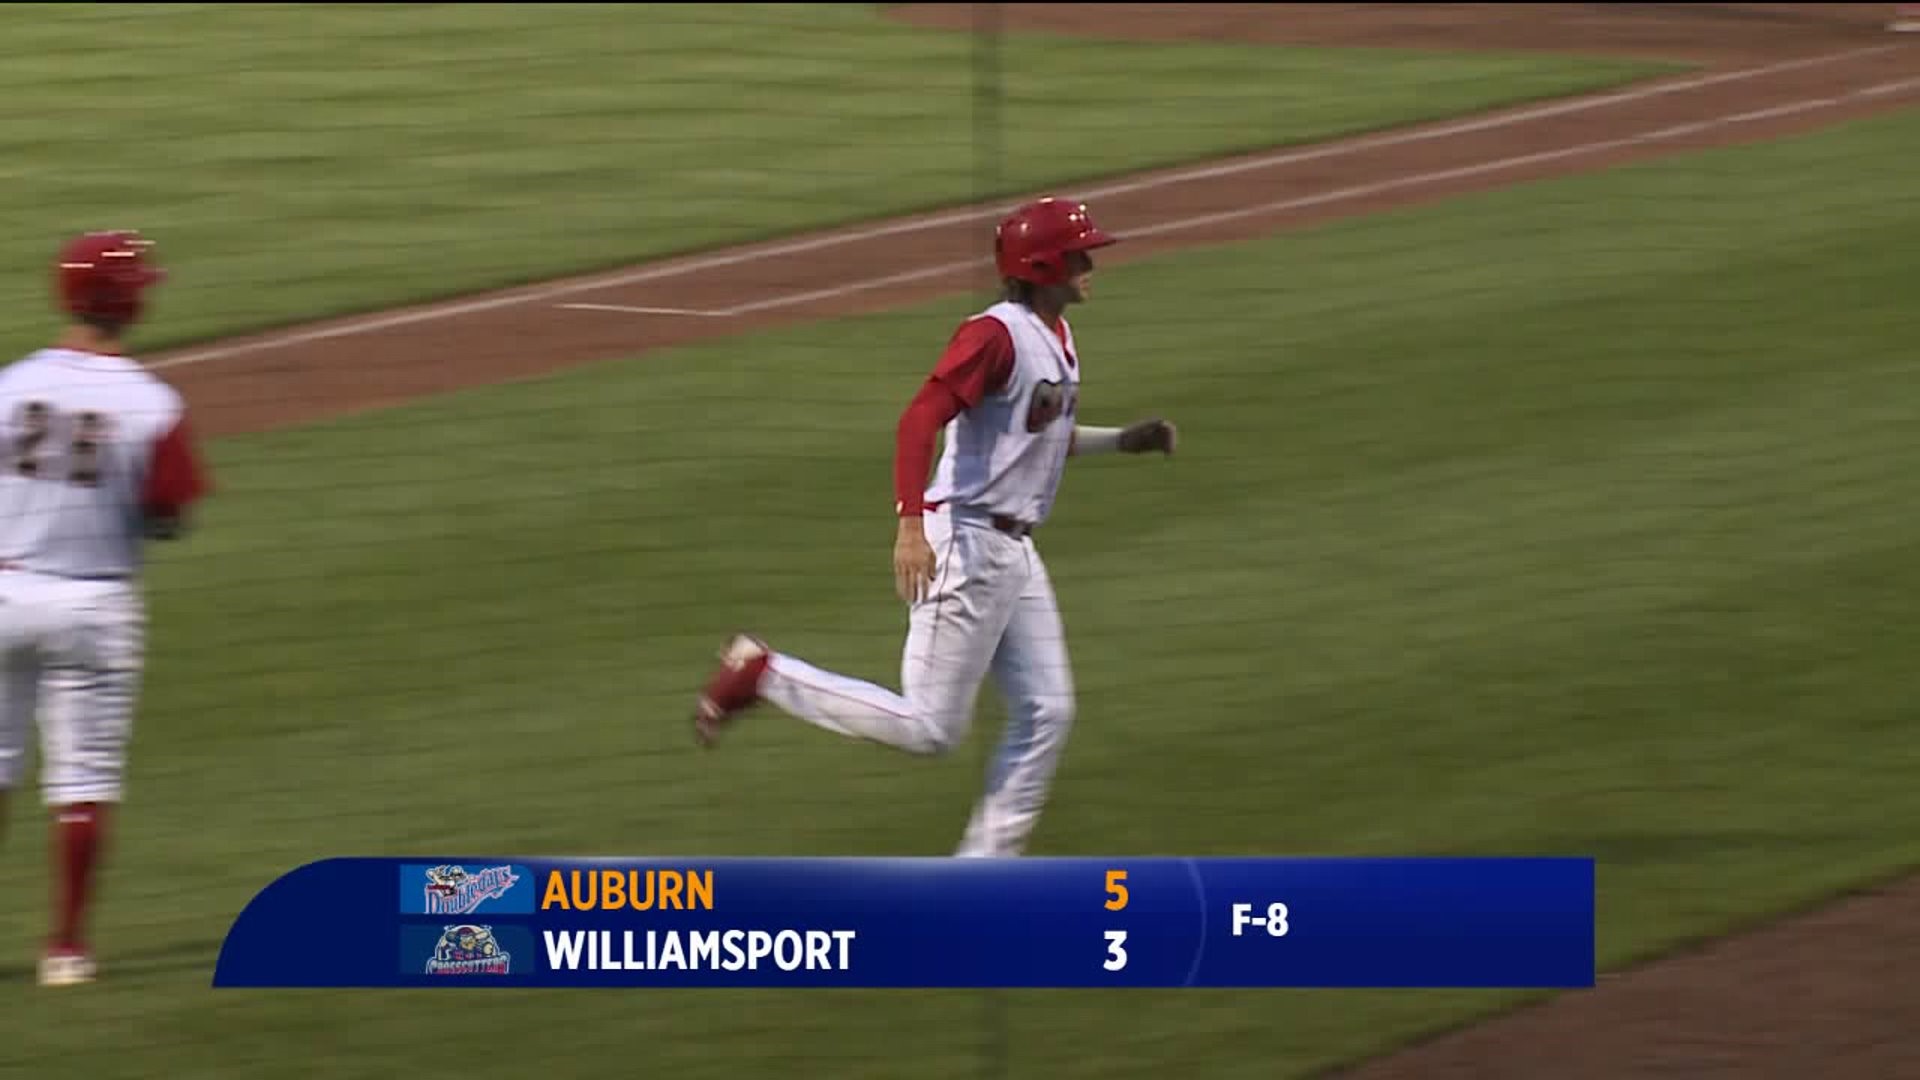 Auburn vs Williamsport